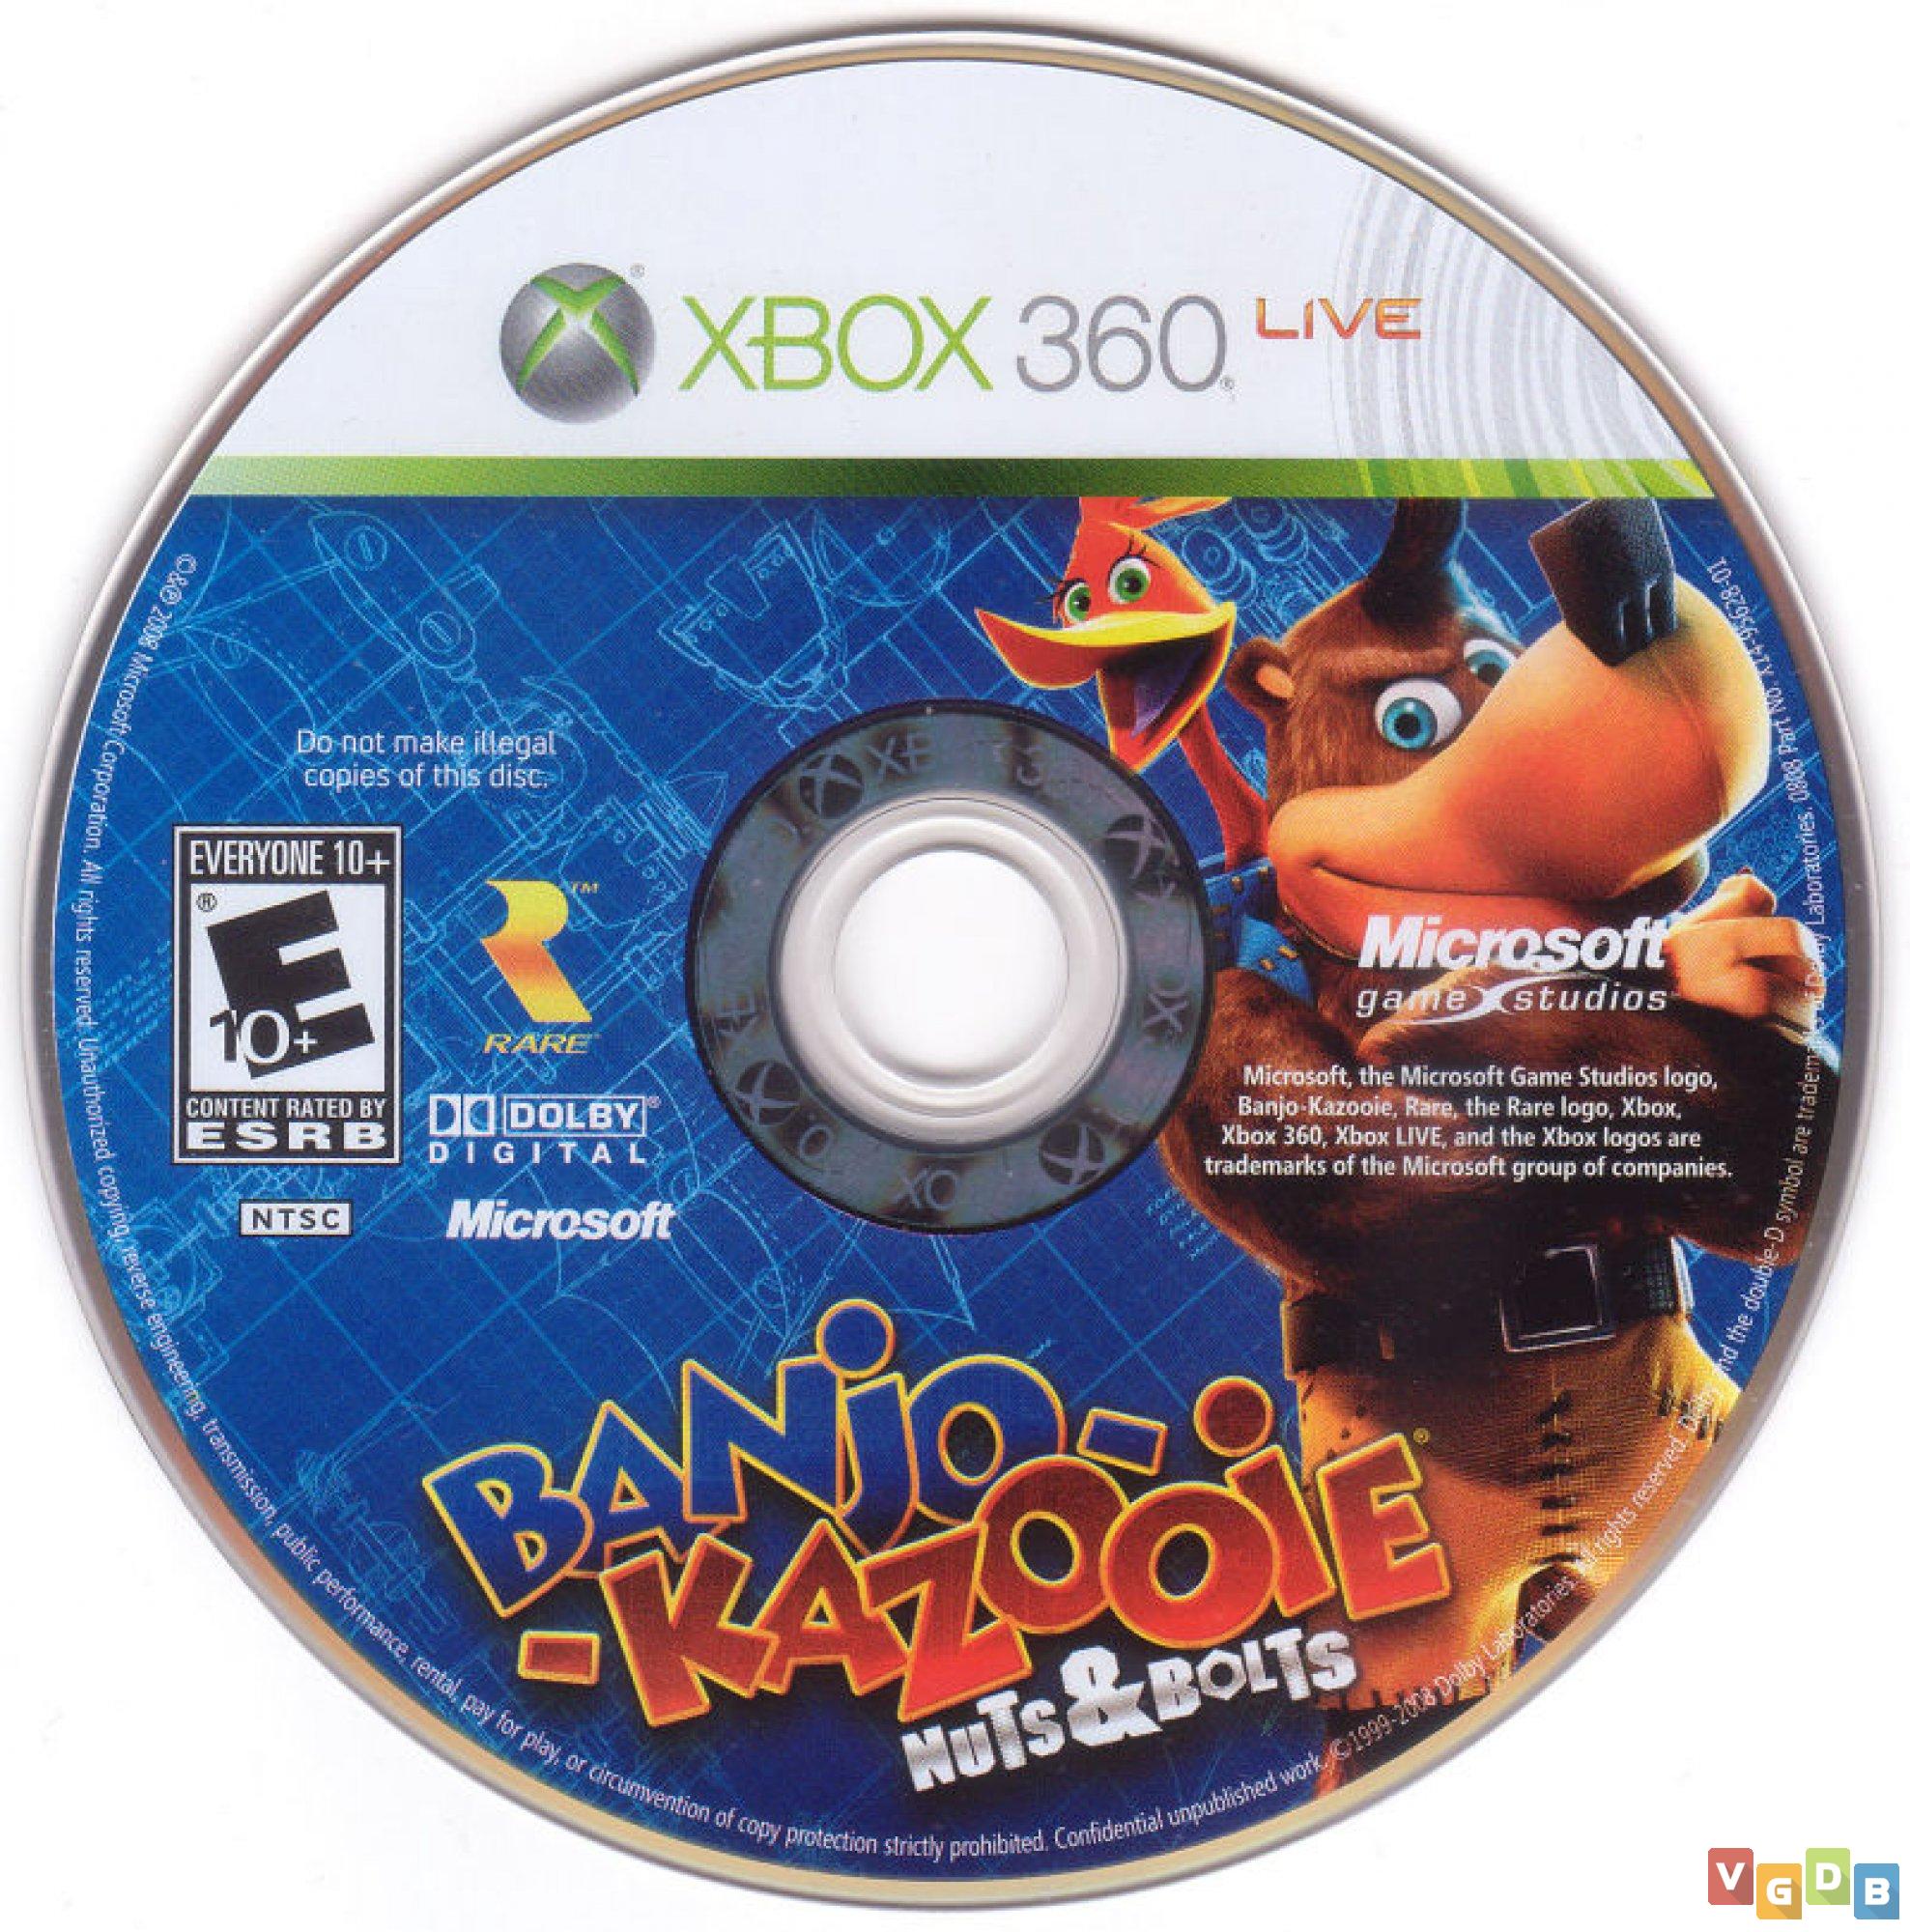 Banjo-Kazooie Nuts & Bolts - Platinum Hits - Xbox 360 - DVD 